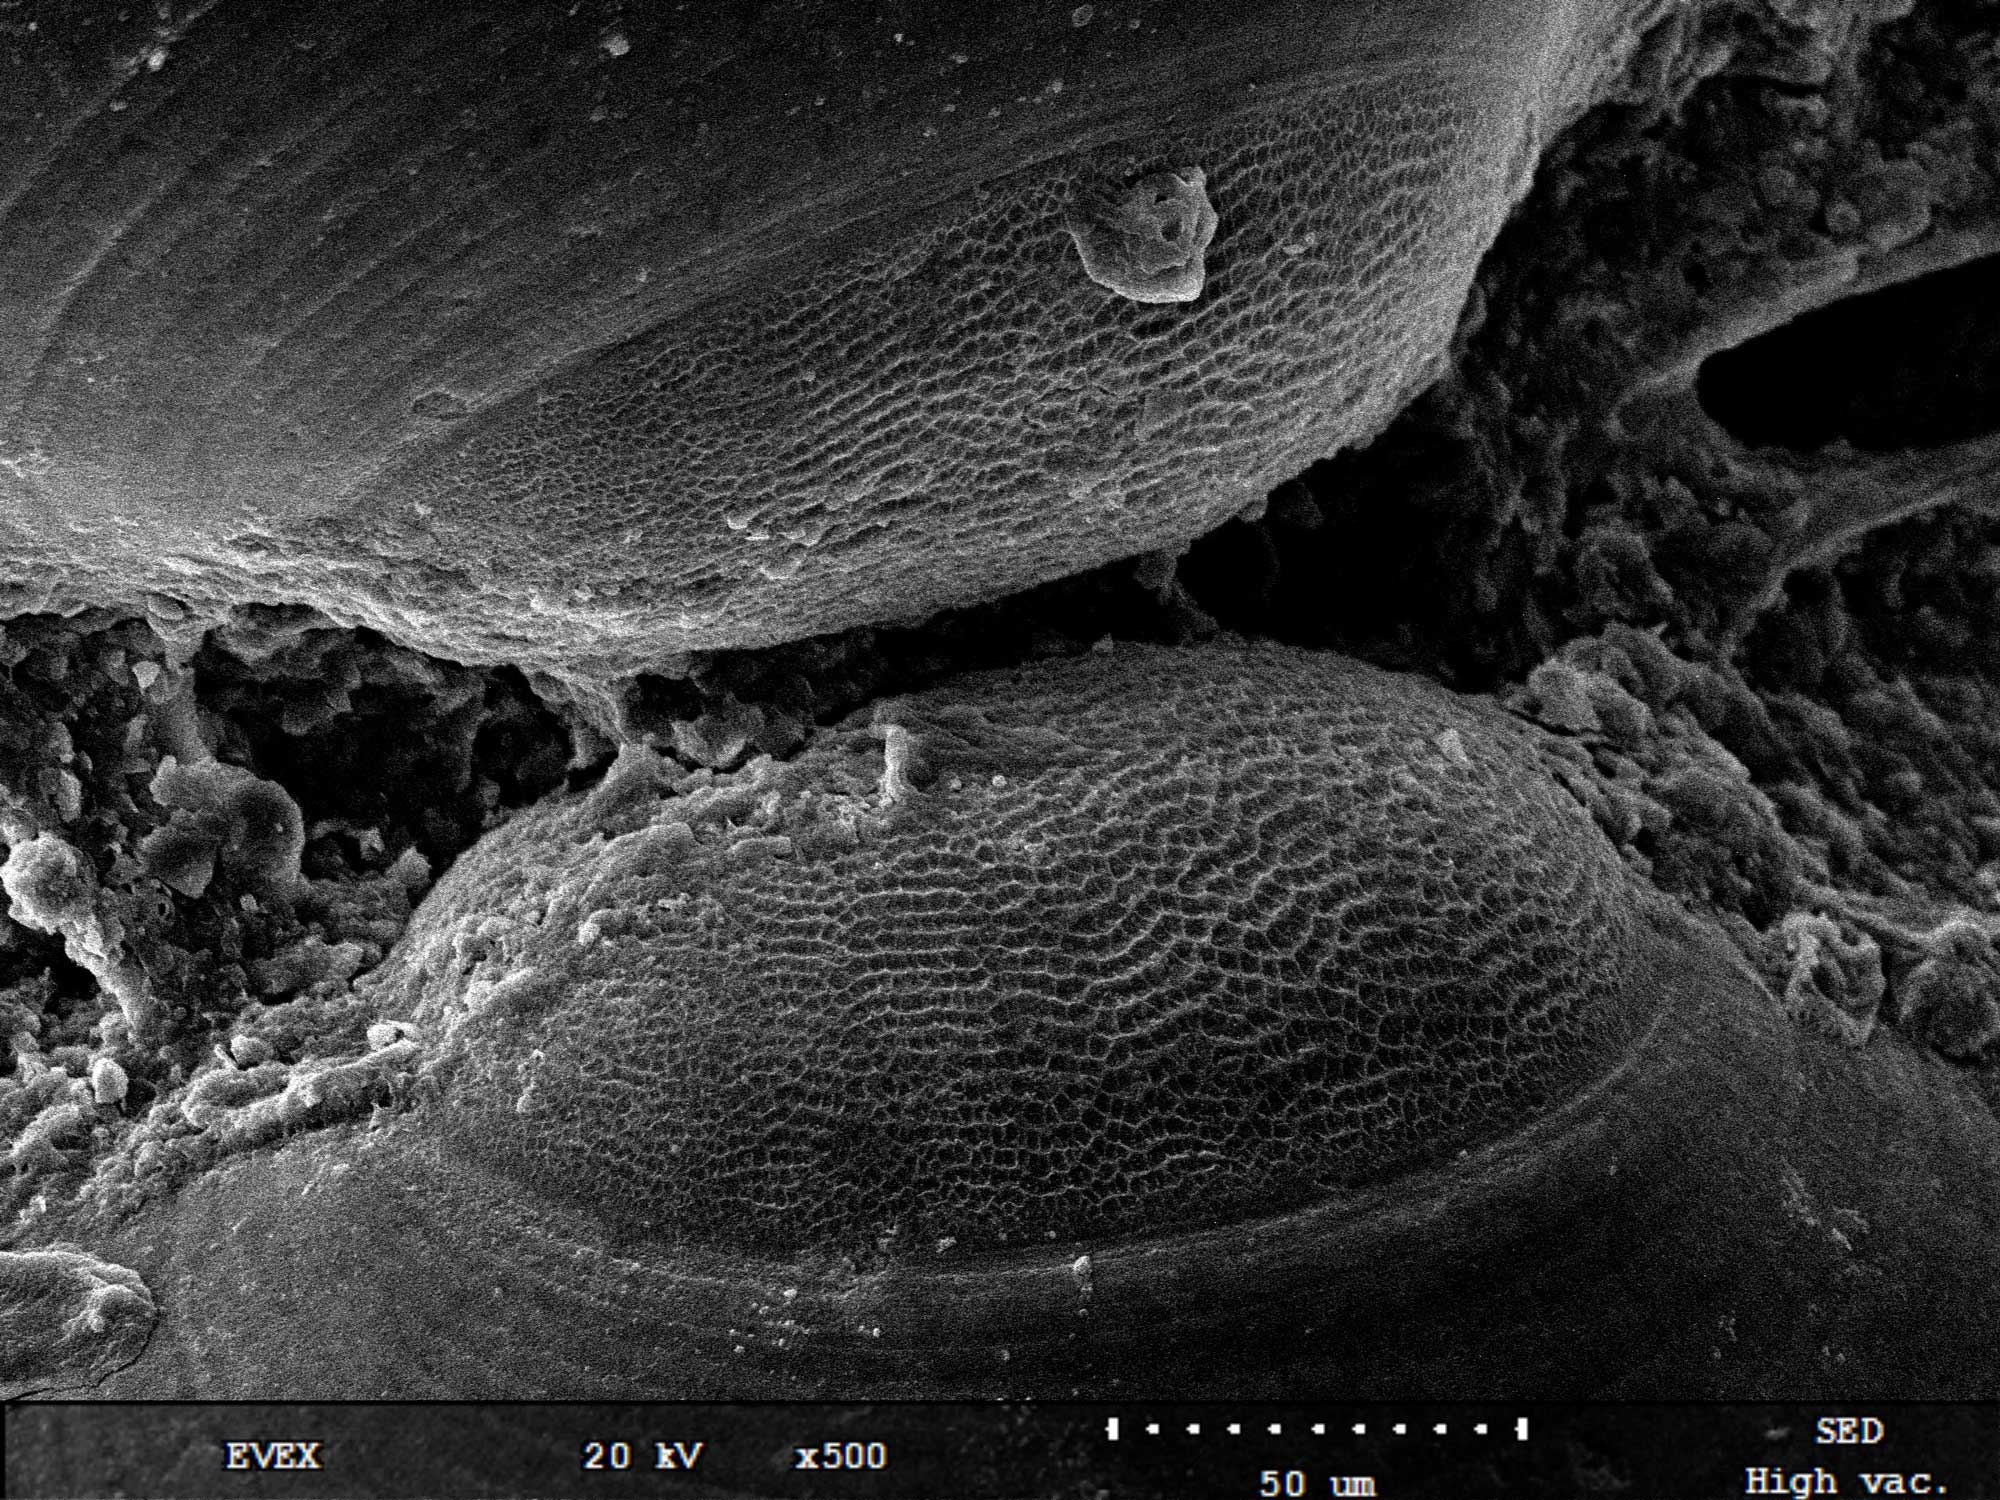 Scanning electron microscope image of a bivalve prodissoconch.